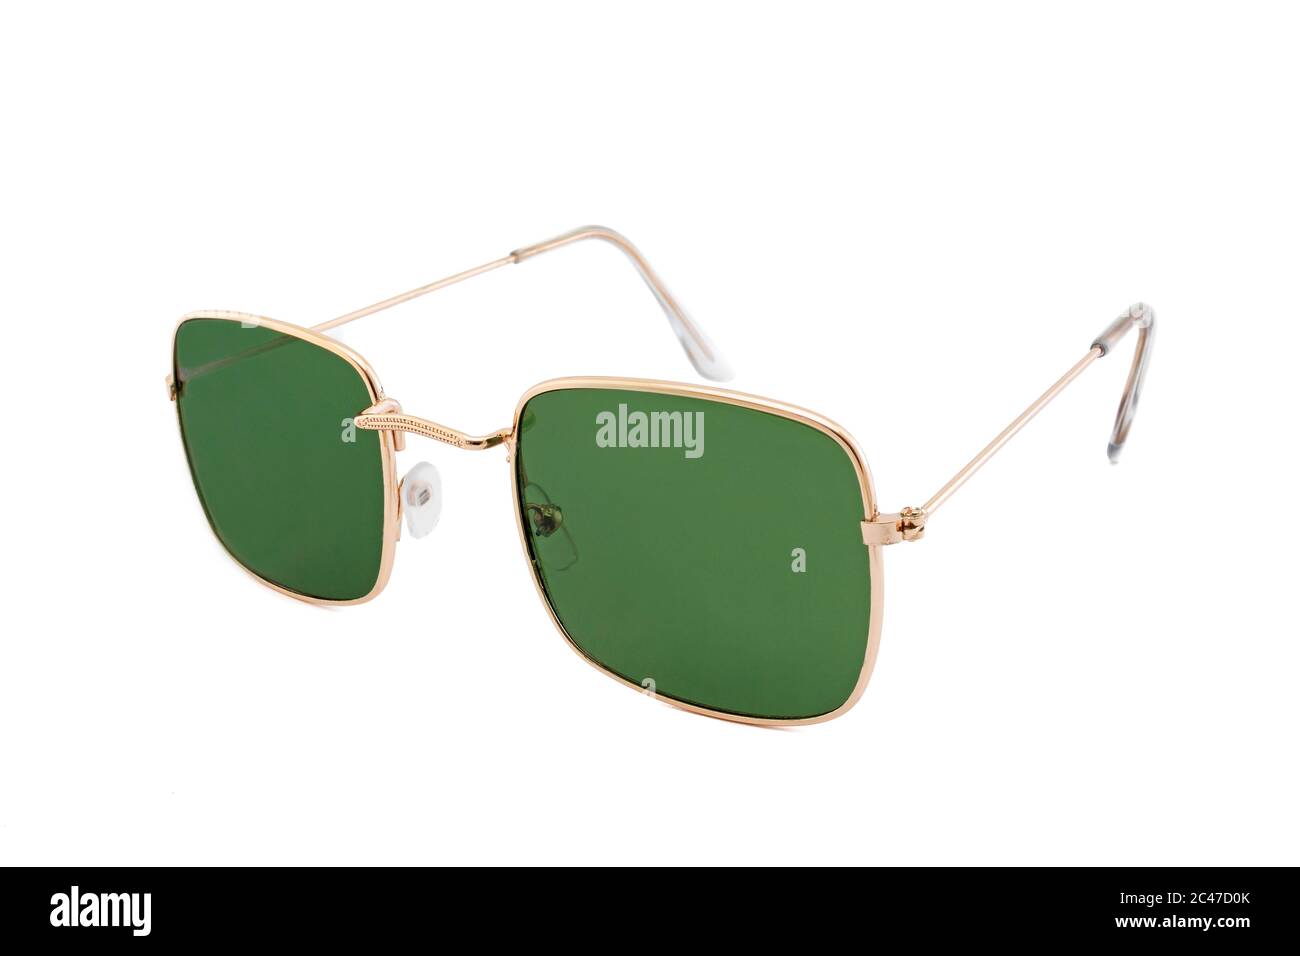 Gafas de sol rectangulares verdes con lentes transparentes y marcos dorados  finos aislados sobre fondo blanco. Vista lateral Fotografía de stock - Alamy